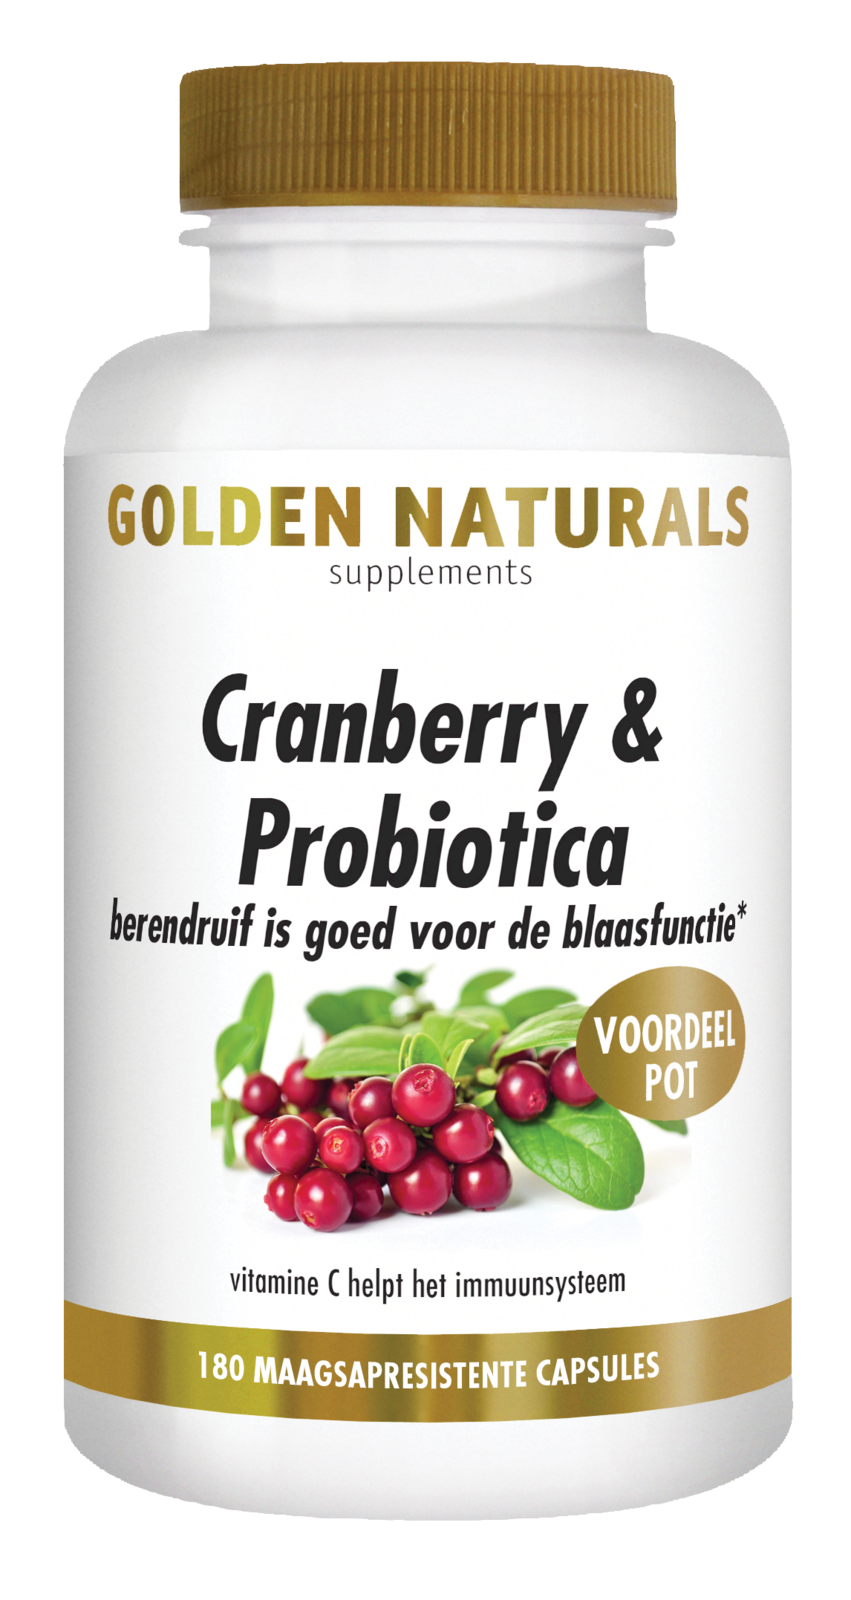 Golden Naturals Cranberry & Probiotica Capsules kopen